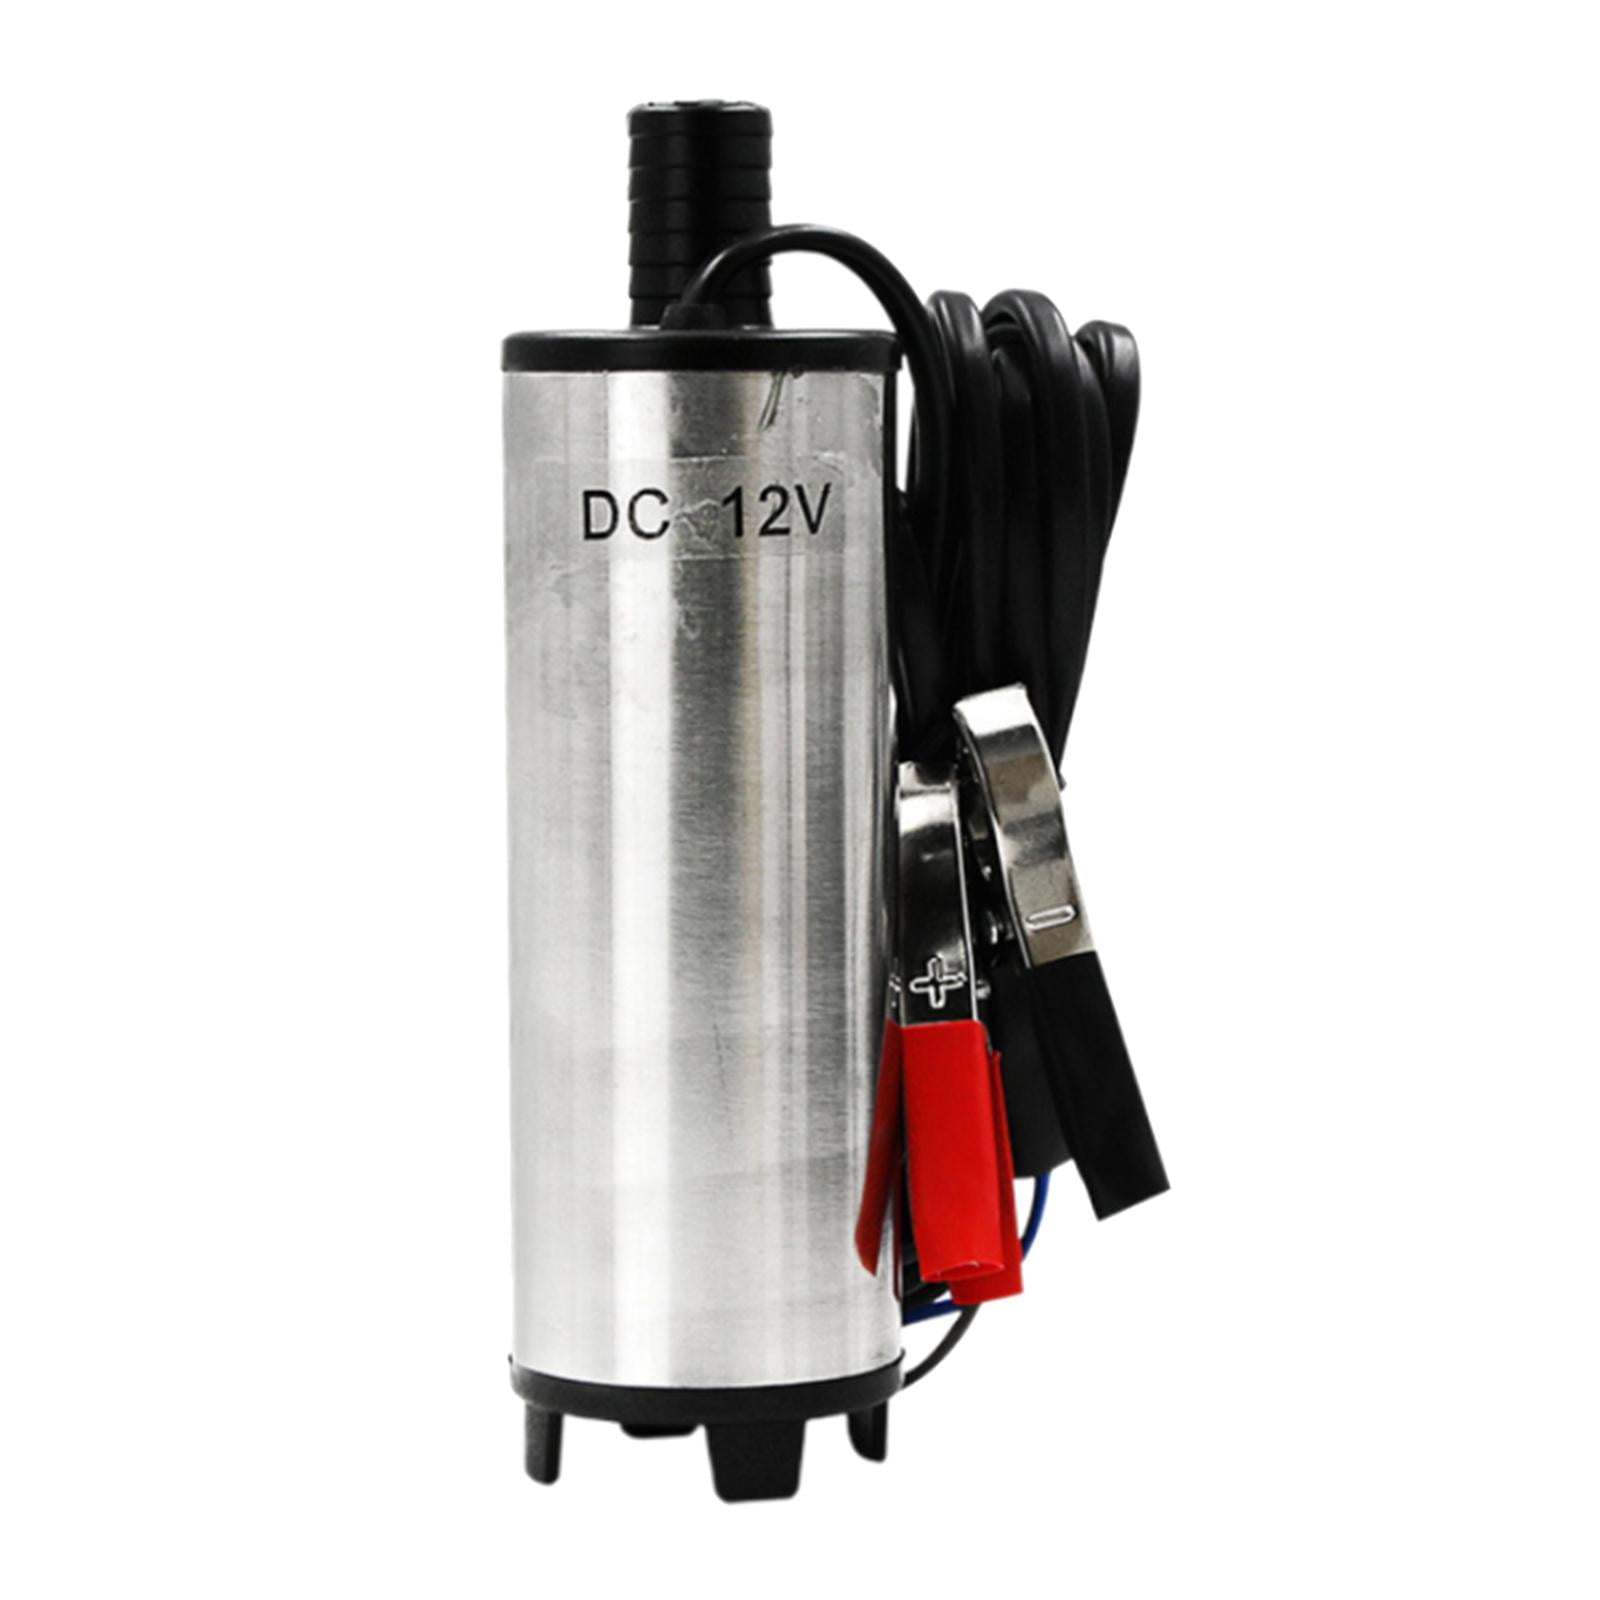 SAMOA® 12v DC Electric Oil Pump - 200 watt - 11.5 bar pressure